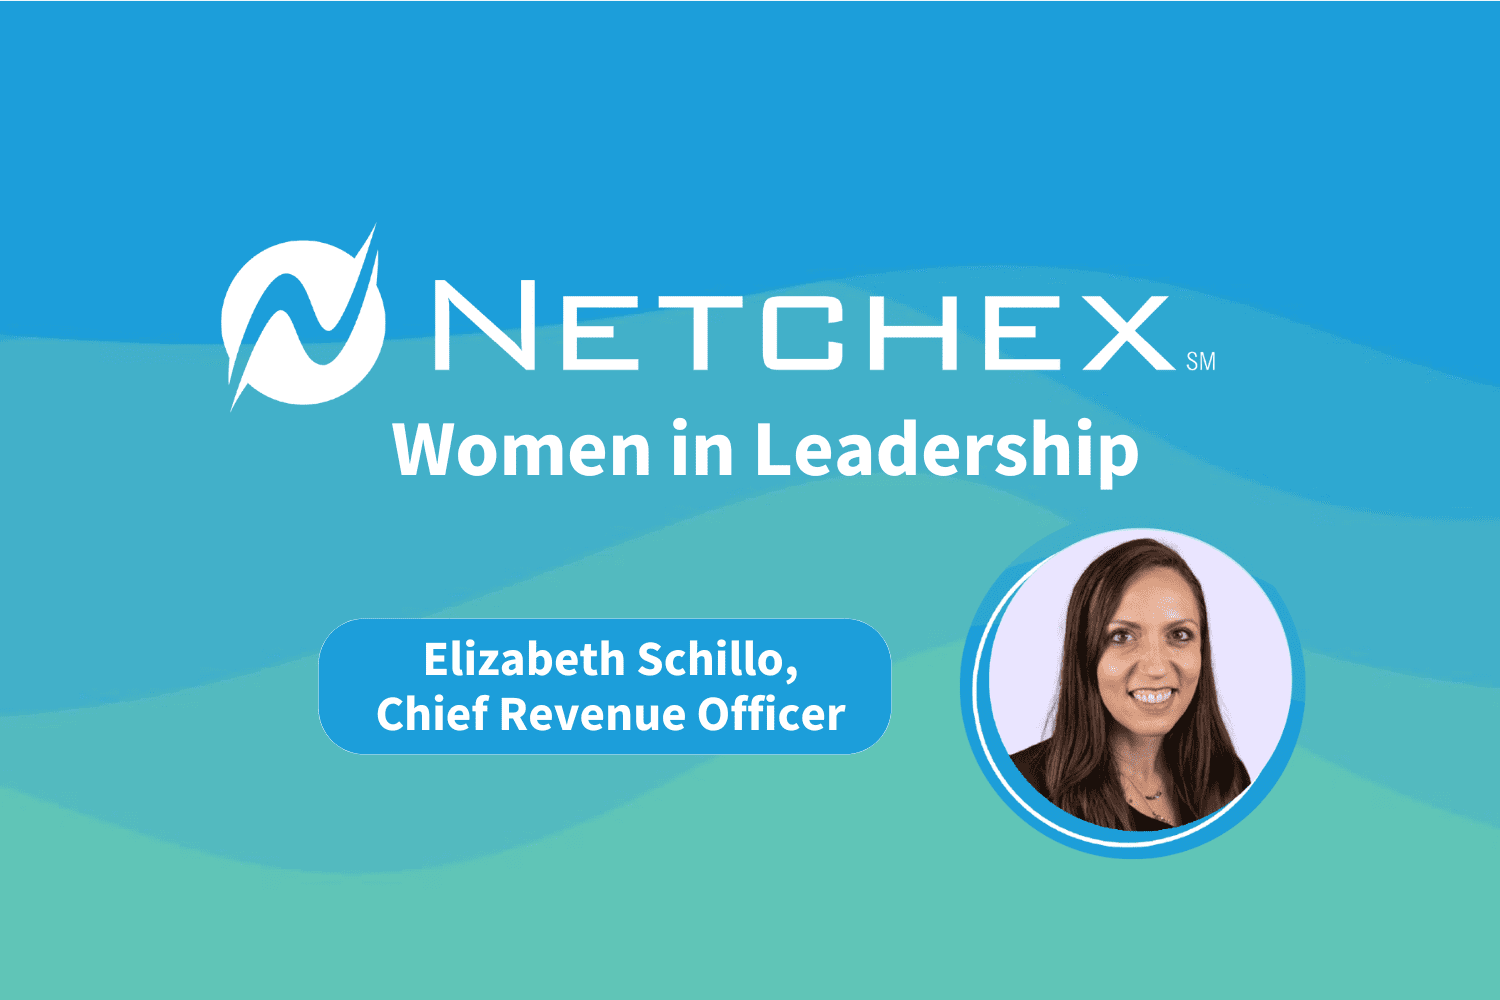 Netchex Women in Leadership: Elizabeth Schillo, Chief Revenue Officer